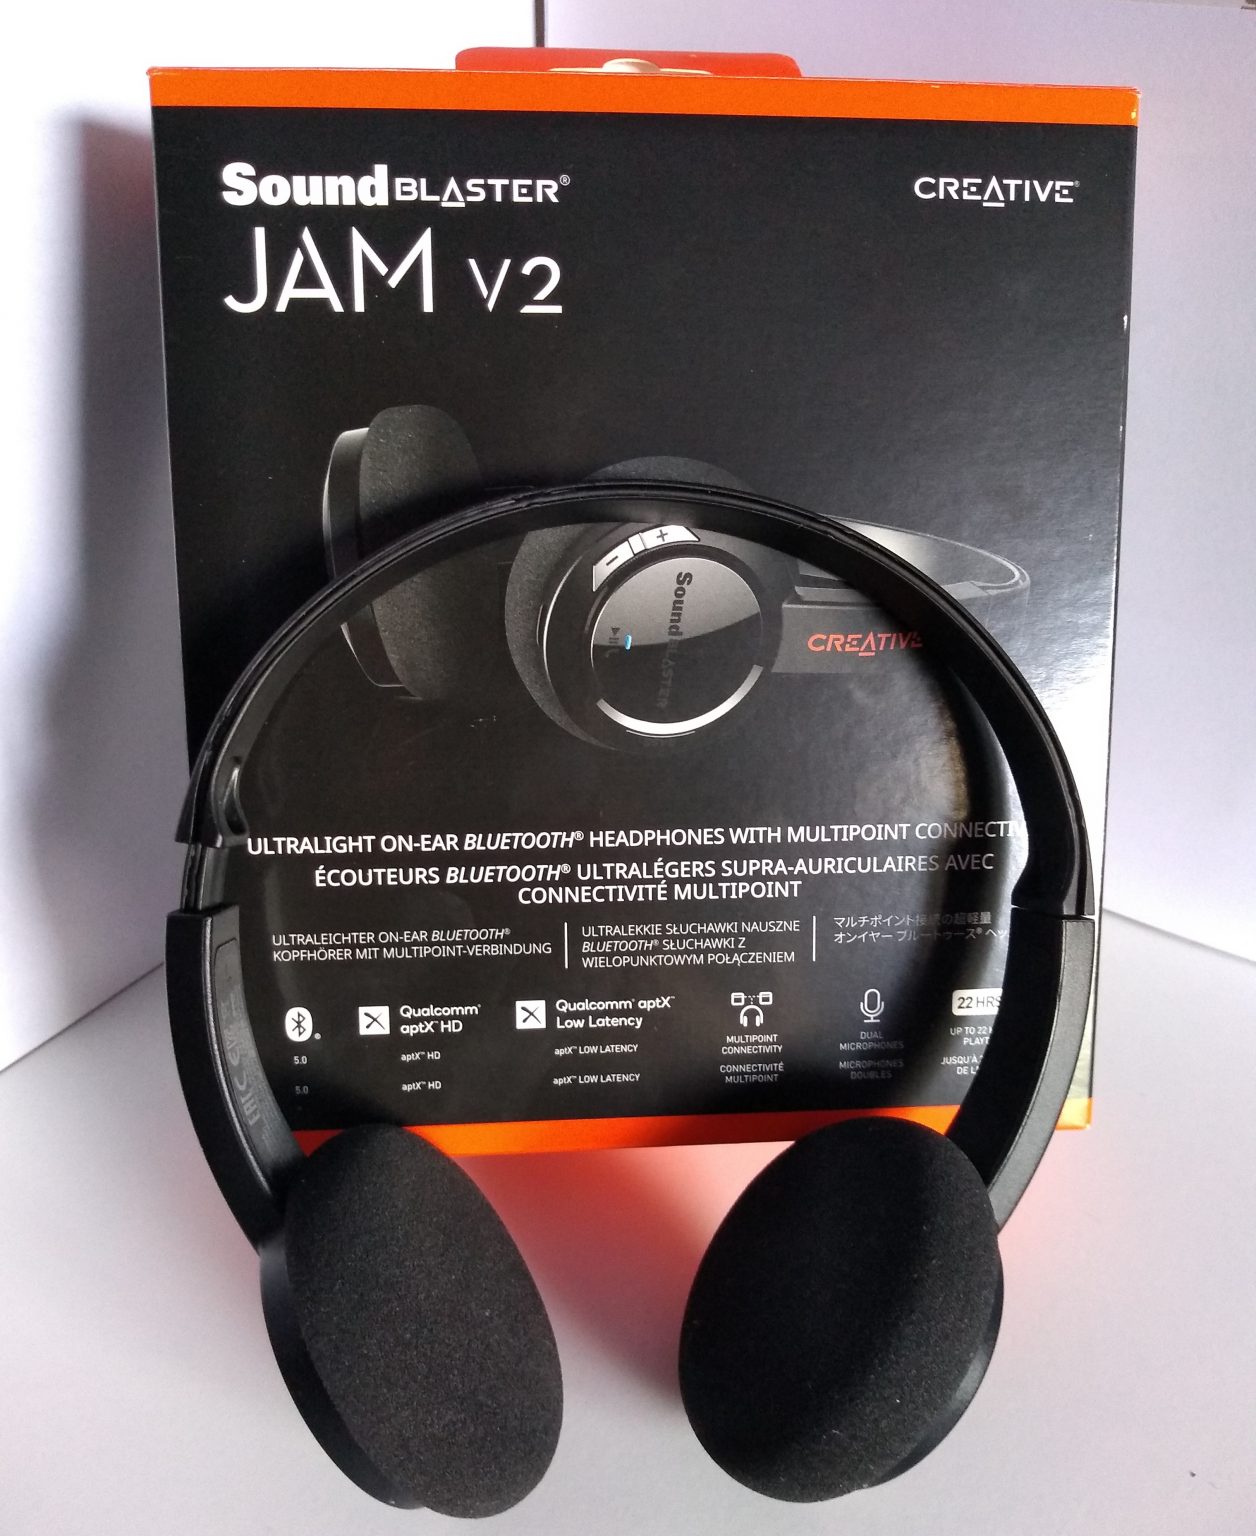 Creative jam v2. Creative Sound Blaster Jam v2.